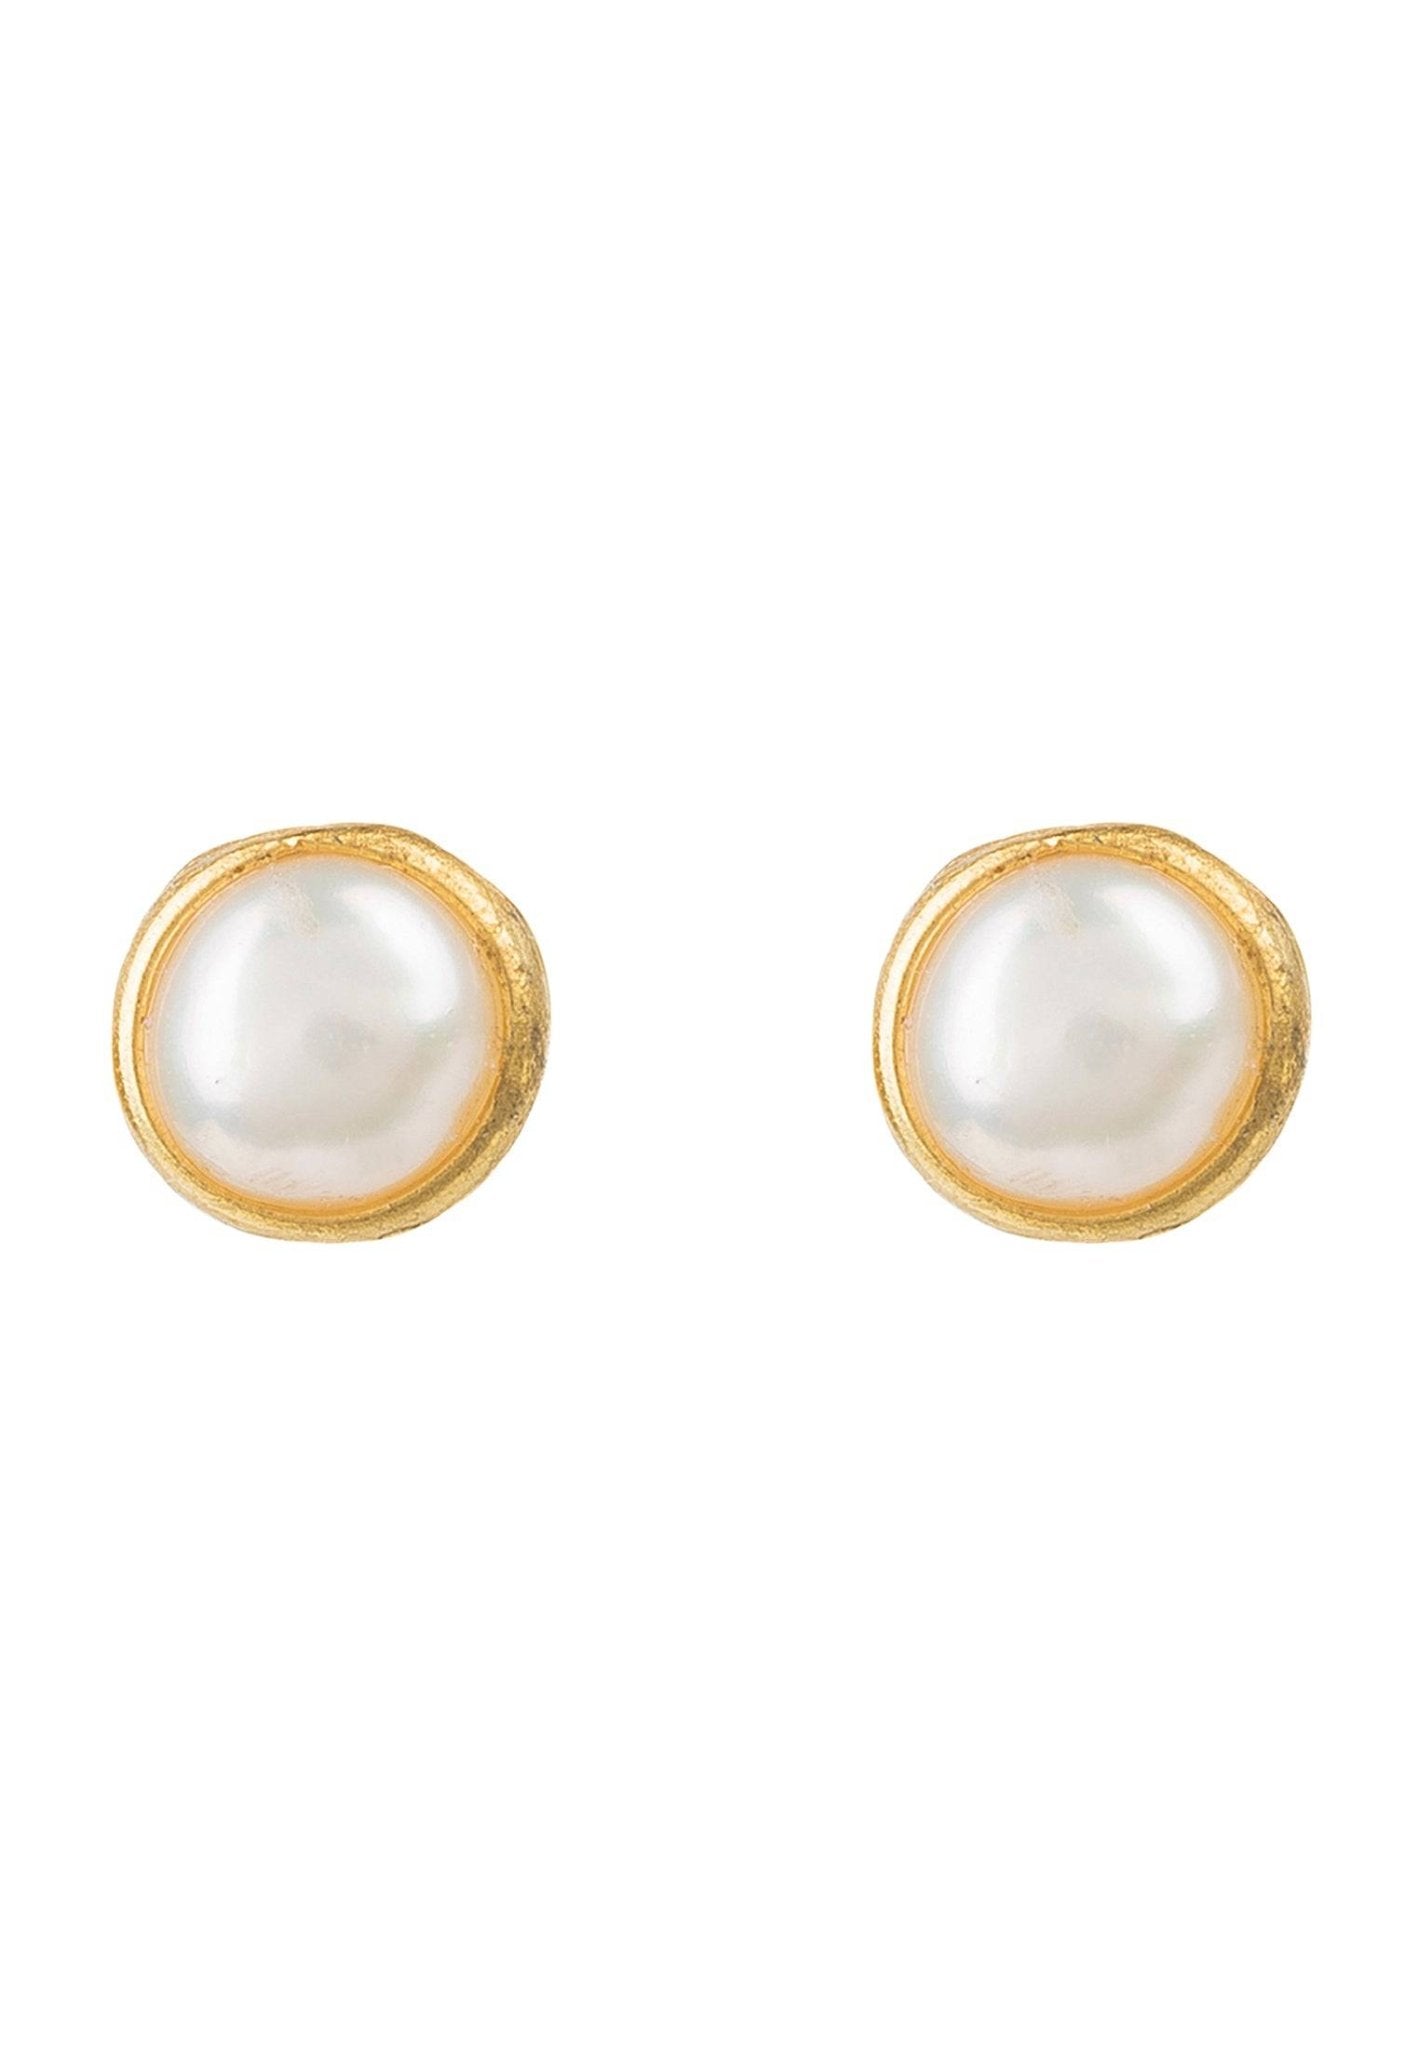 Petite Gemstone Earrings Gold White Pearl - LATELITA Earrings